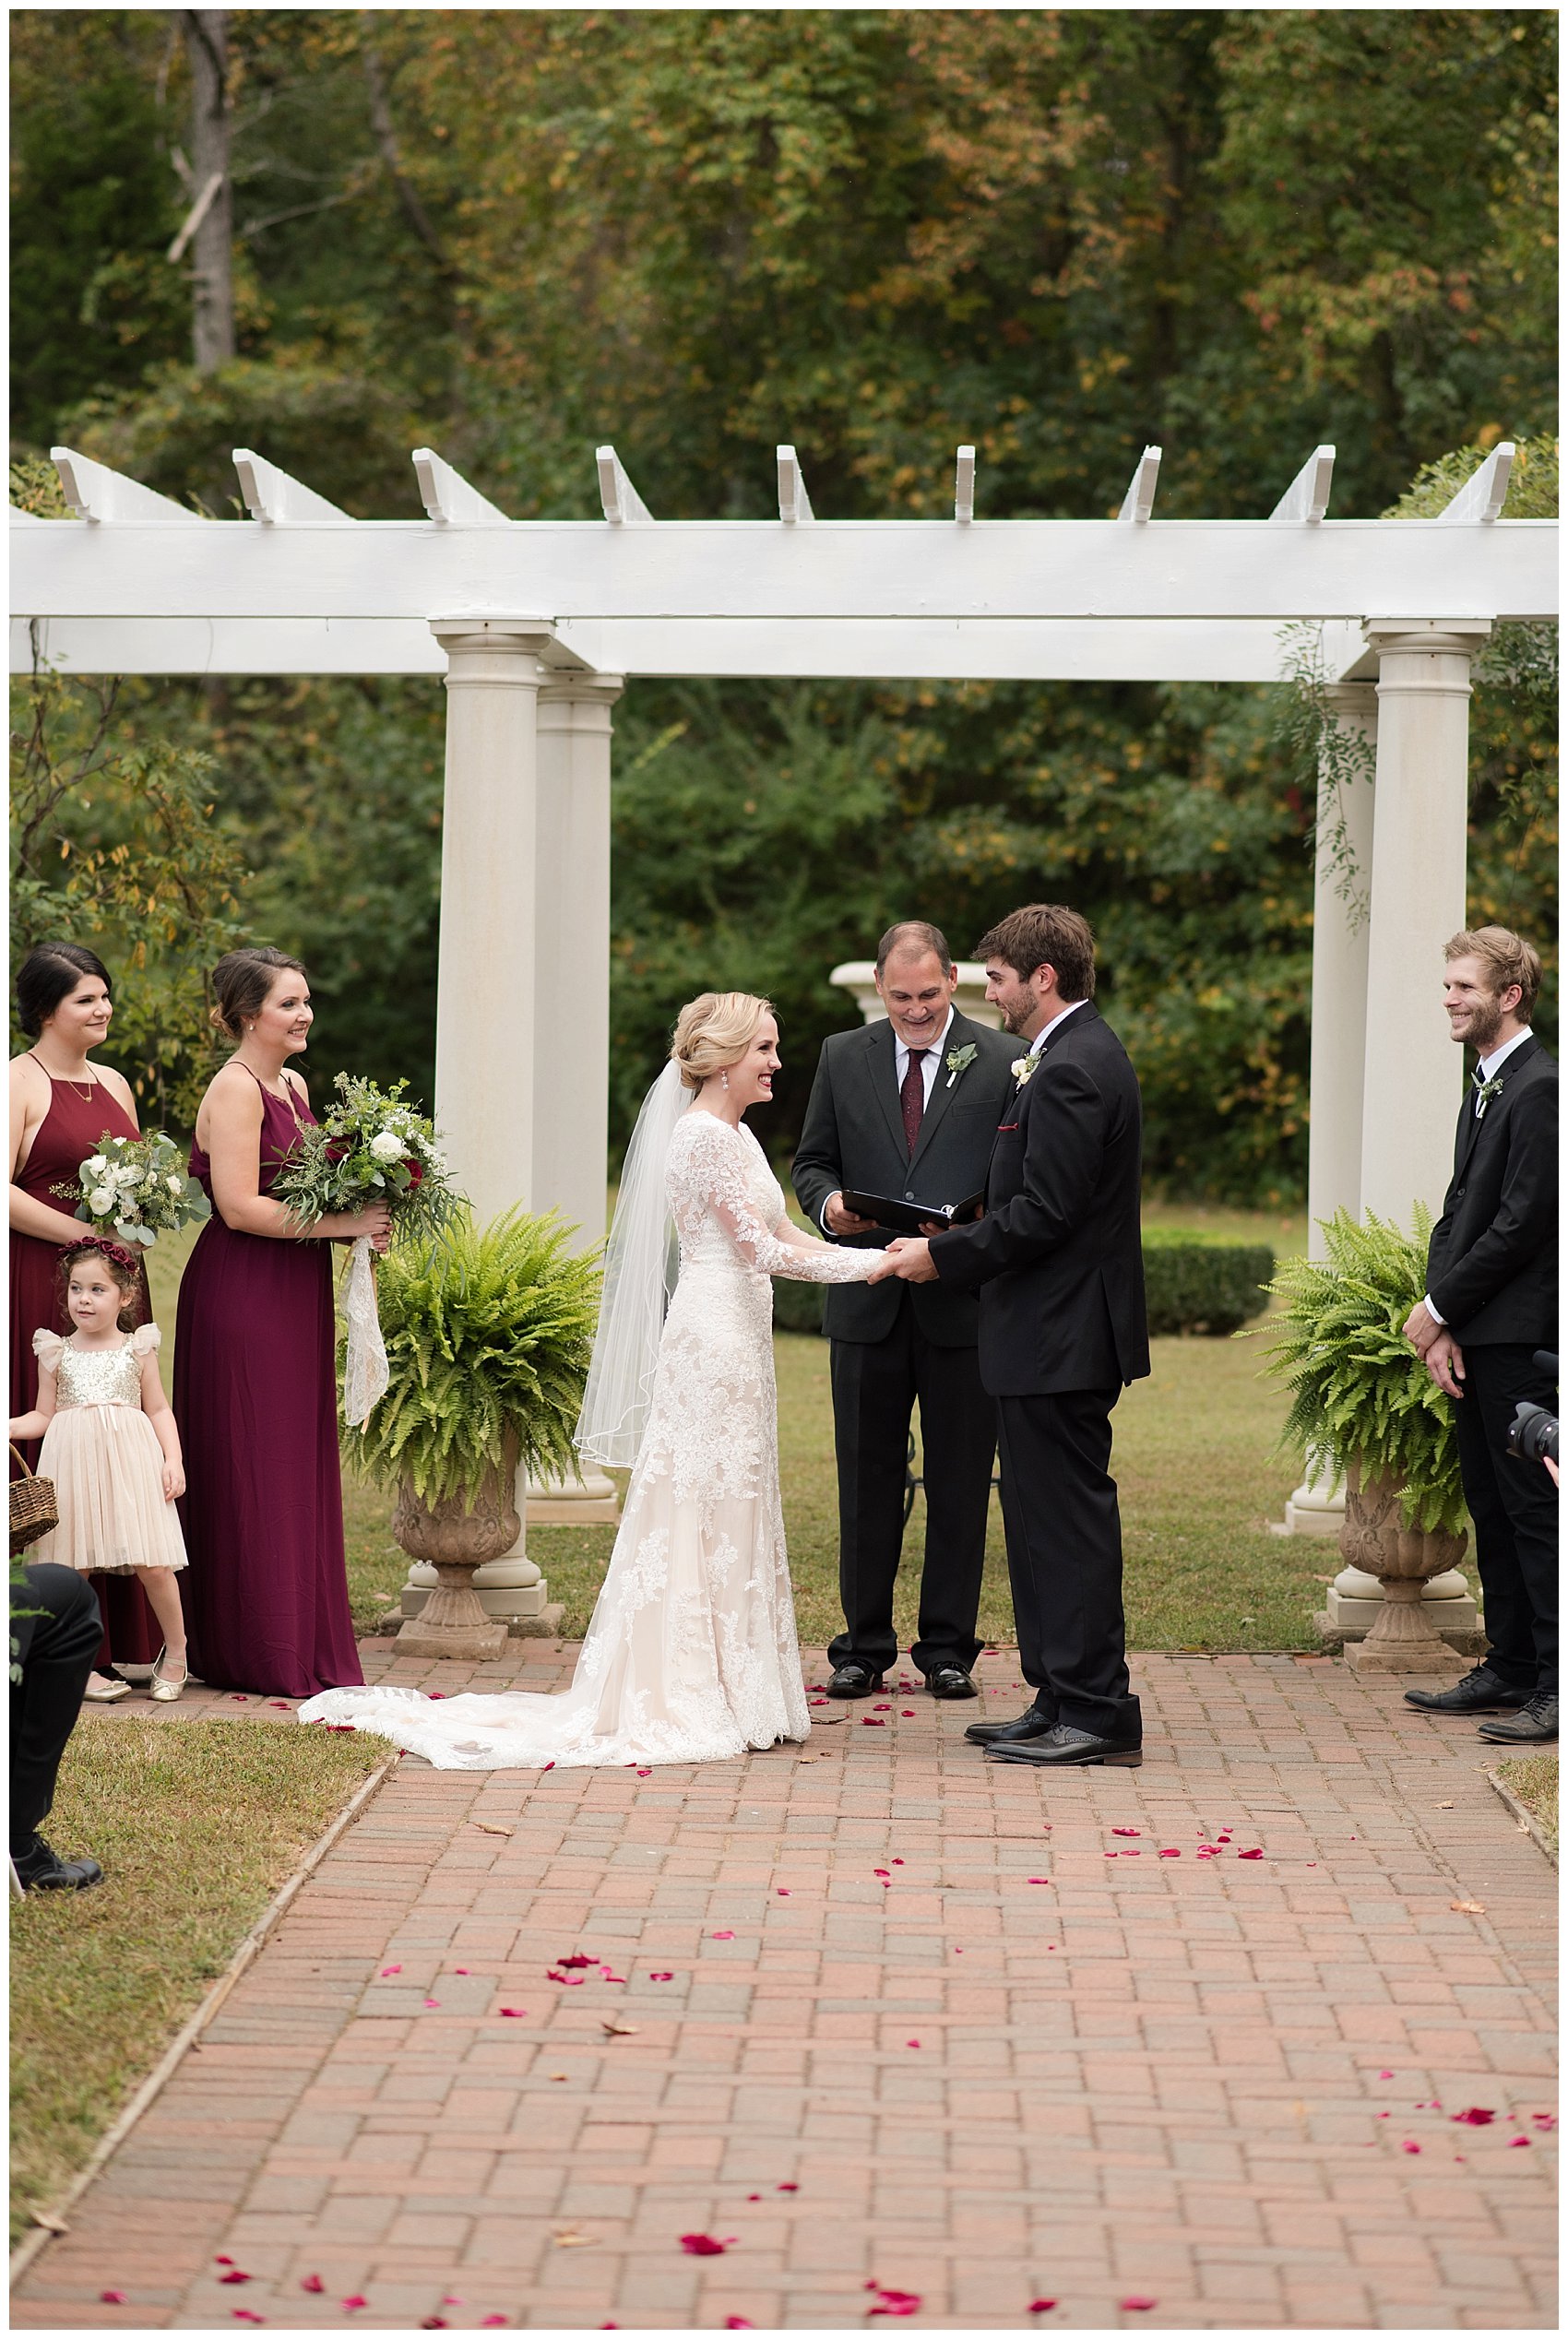 Red Wine Moss Gre
en Fall Autumn Wedding Historic Jasmine Plantation Providence Forge Virginia Wedding Photographers_6550